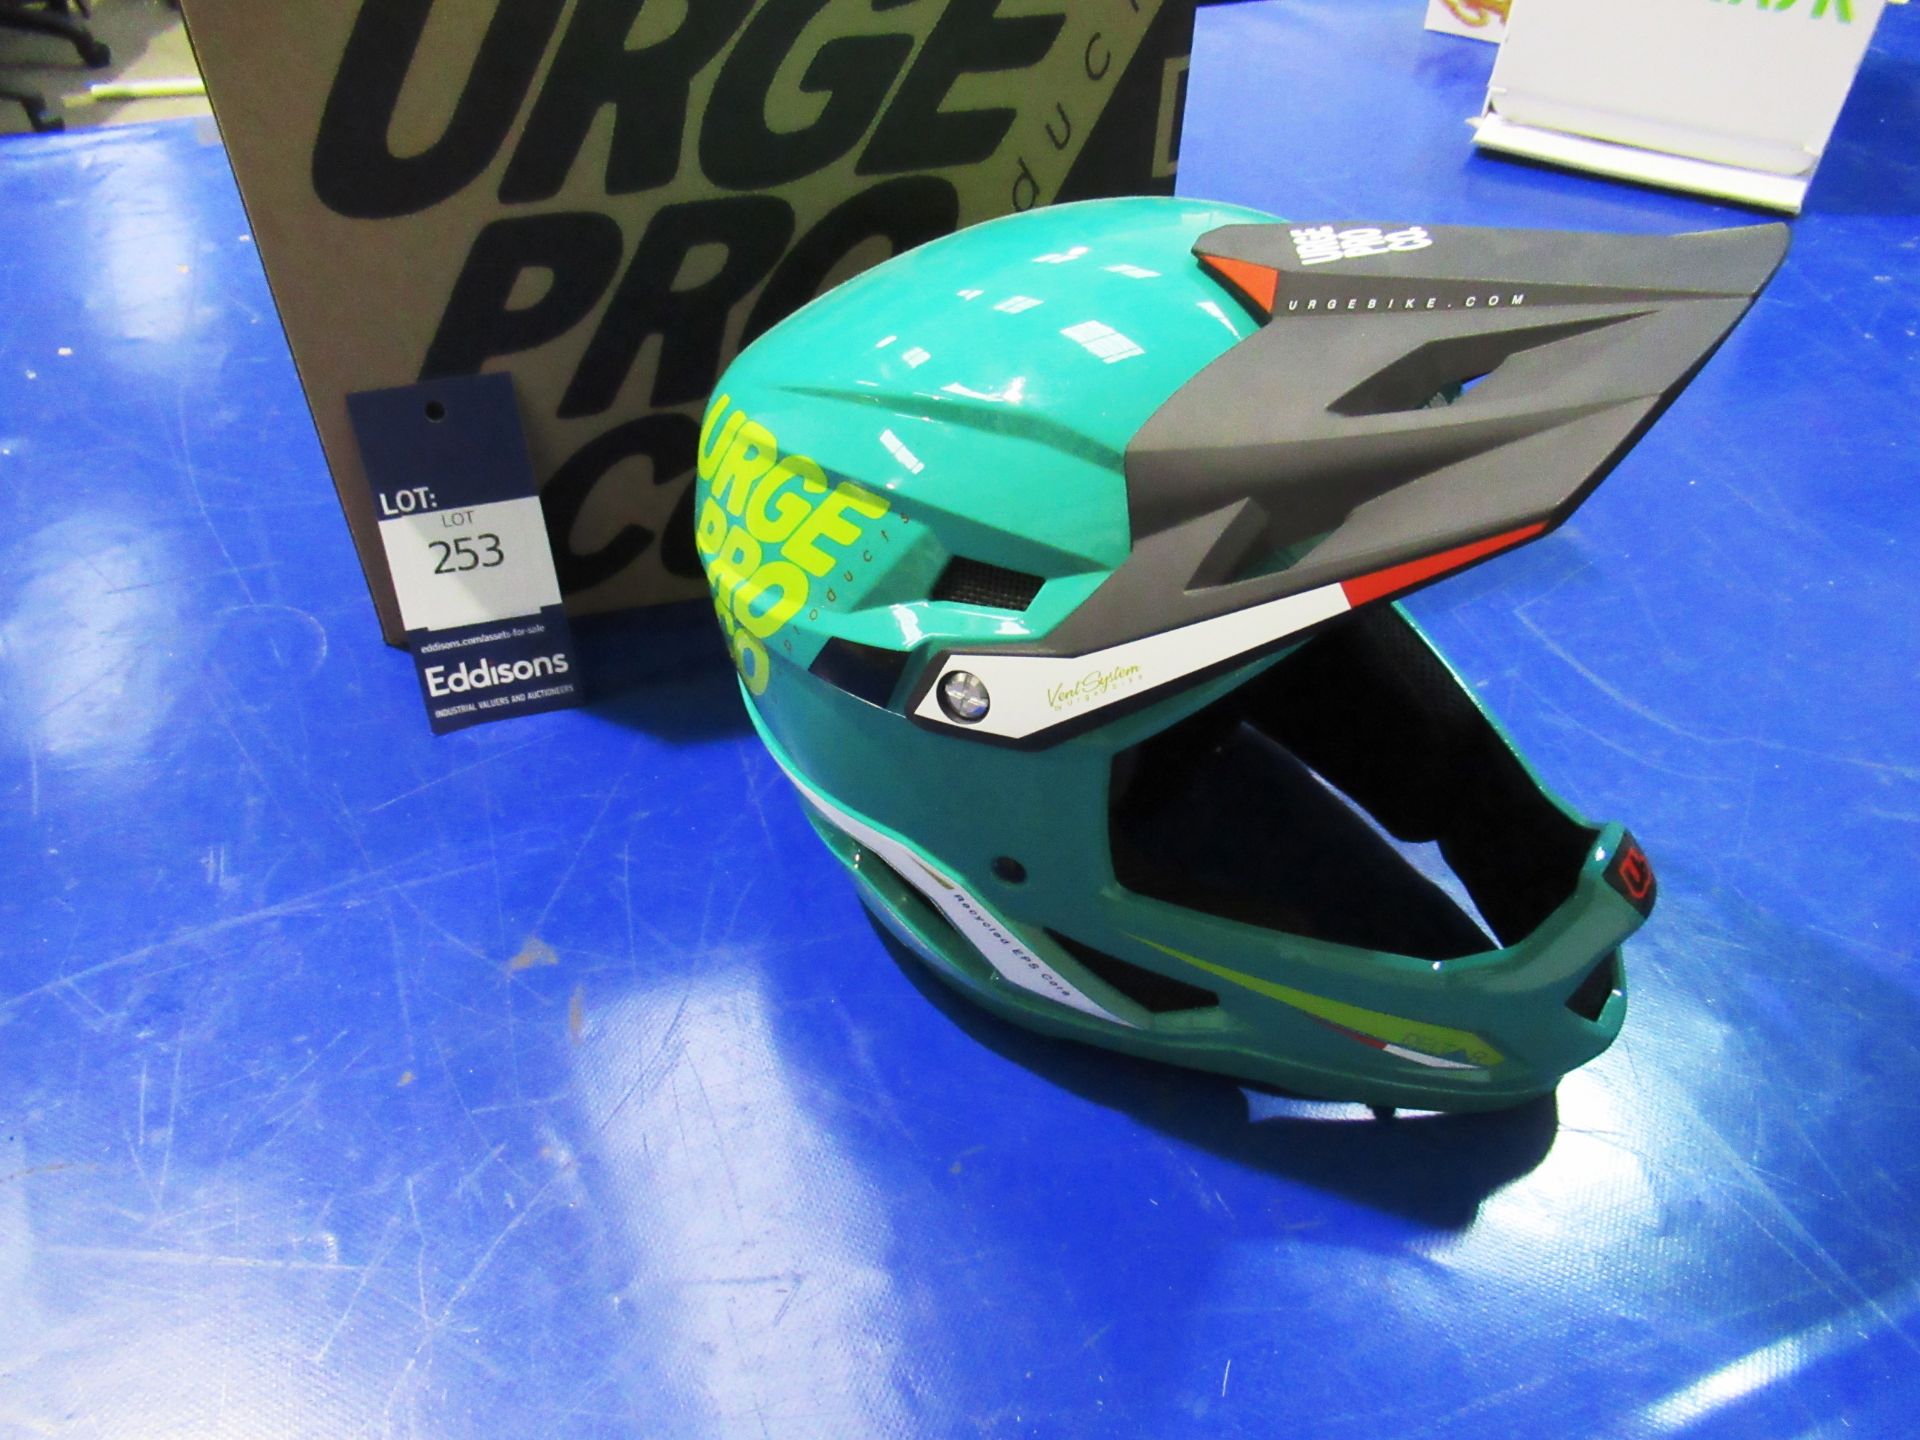 Urge Pro Deltar UBP21332L bicycle helmet, L (Green - Image 2 of 2